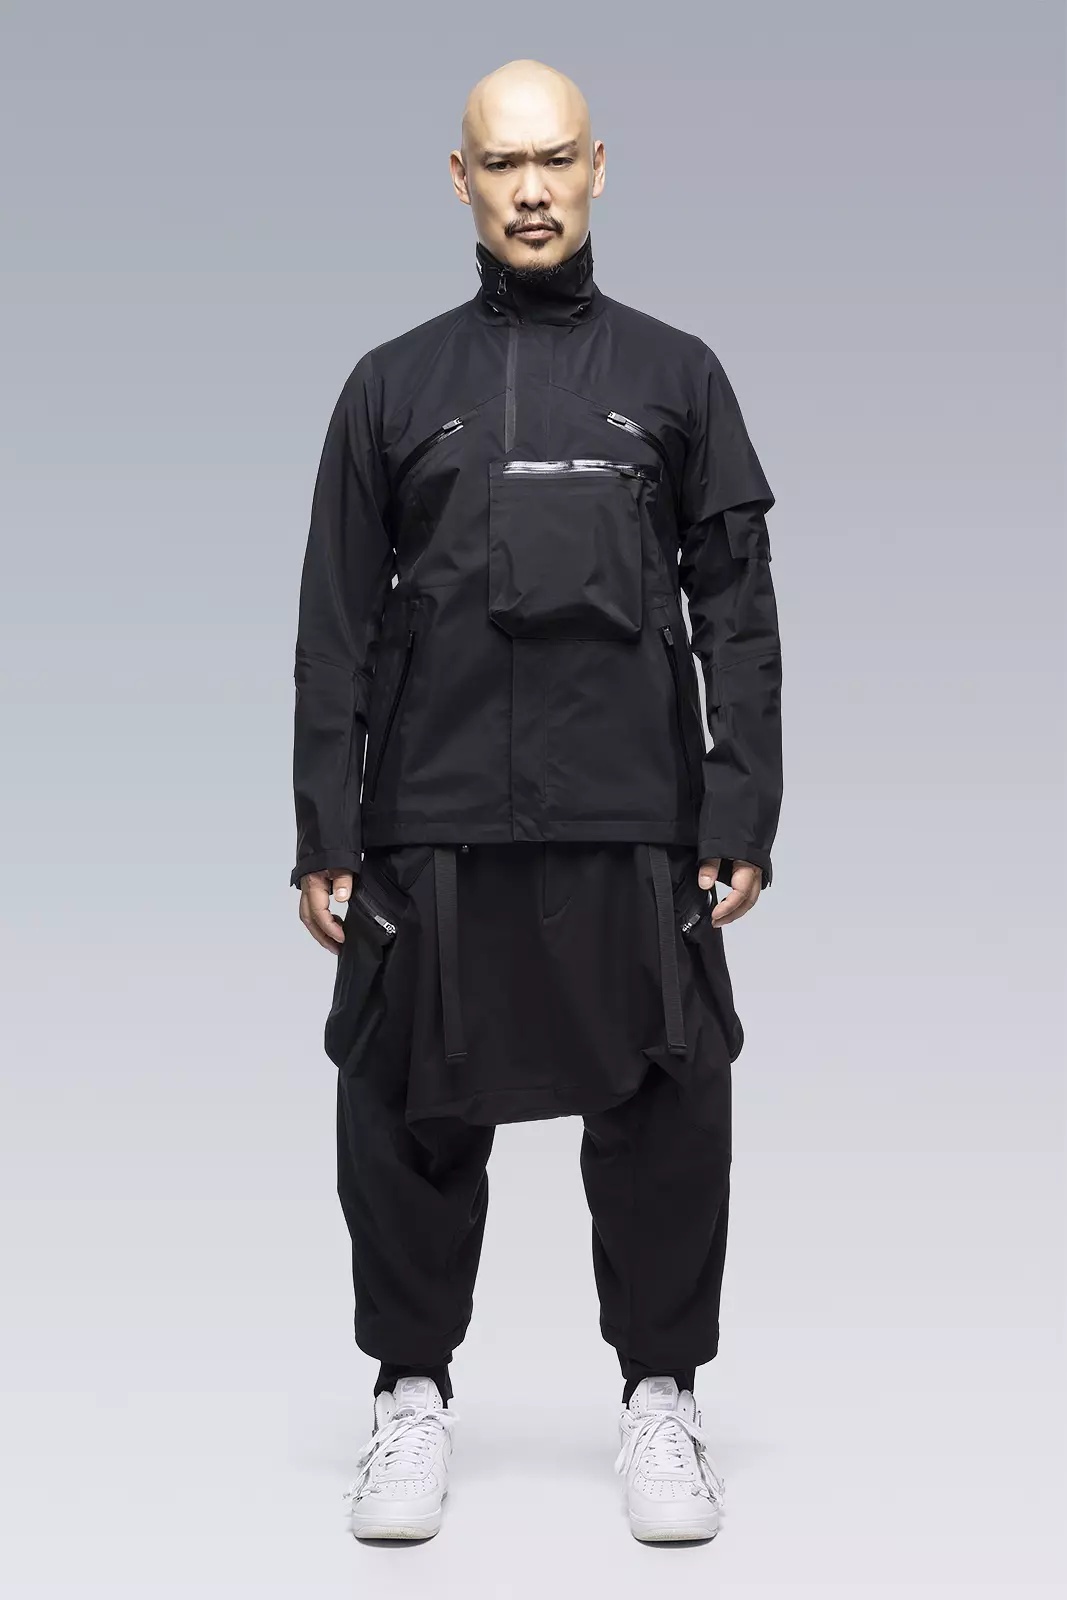 J1A-GTKR-BKS KR EX 3L Gore-Tex® Pro Interops Jacket Black with size 5 WR zippers in gloss black - 8